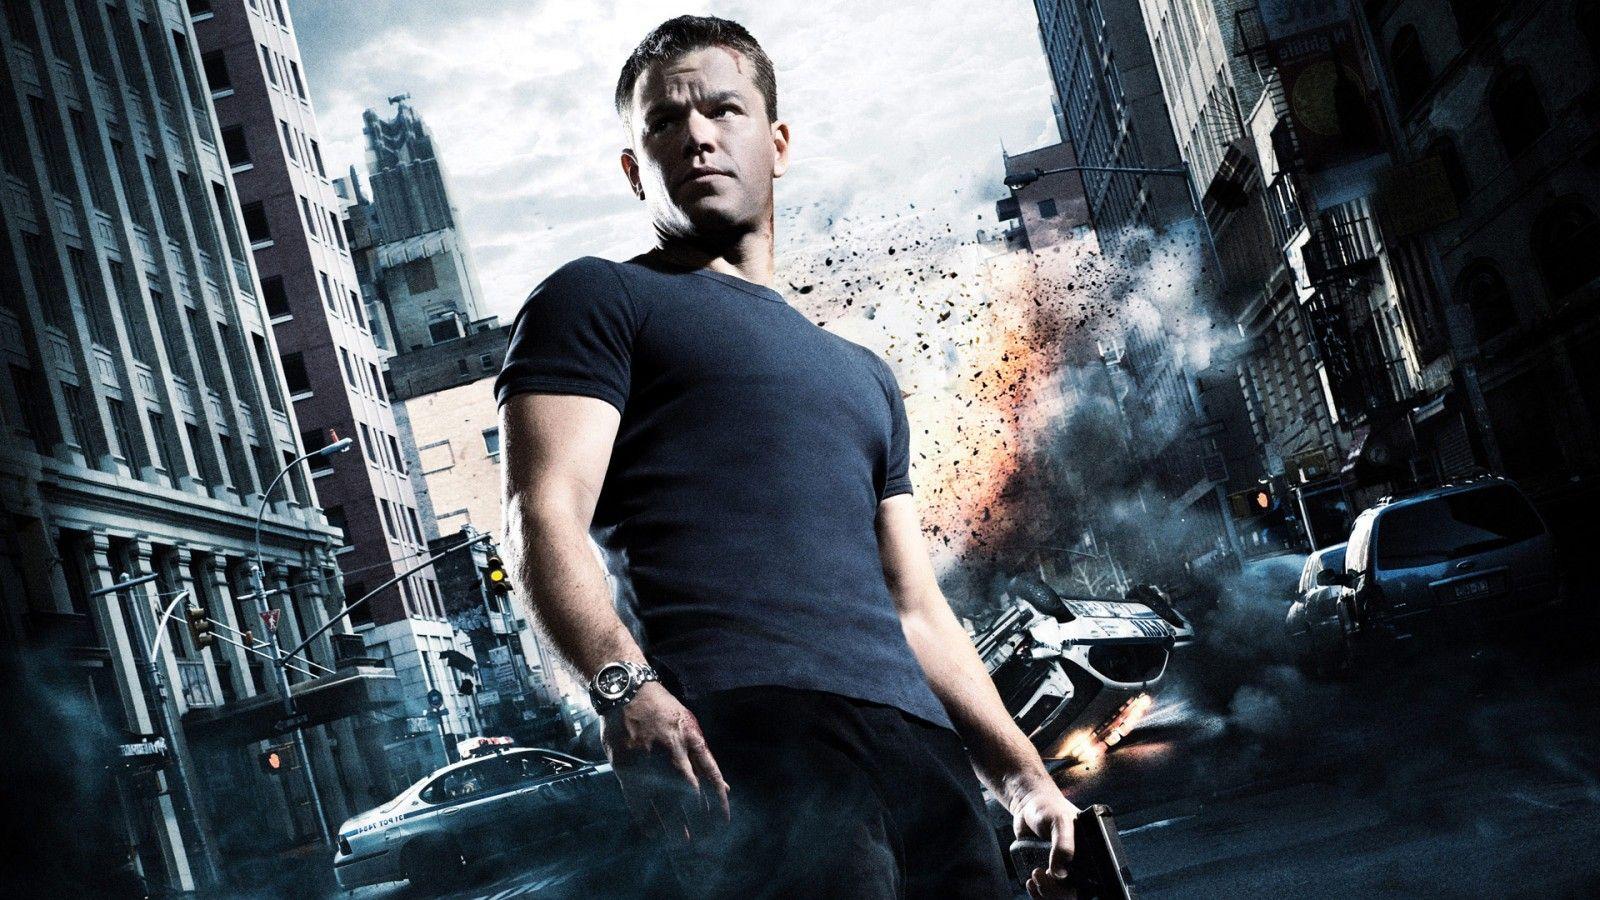 Jason Bourne Wallpaper and Background Image